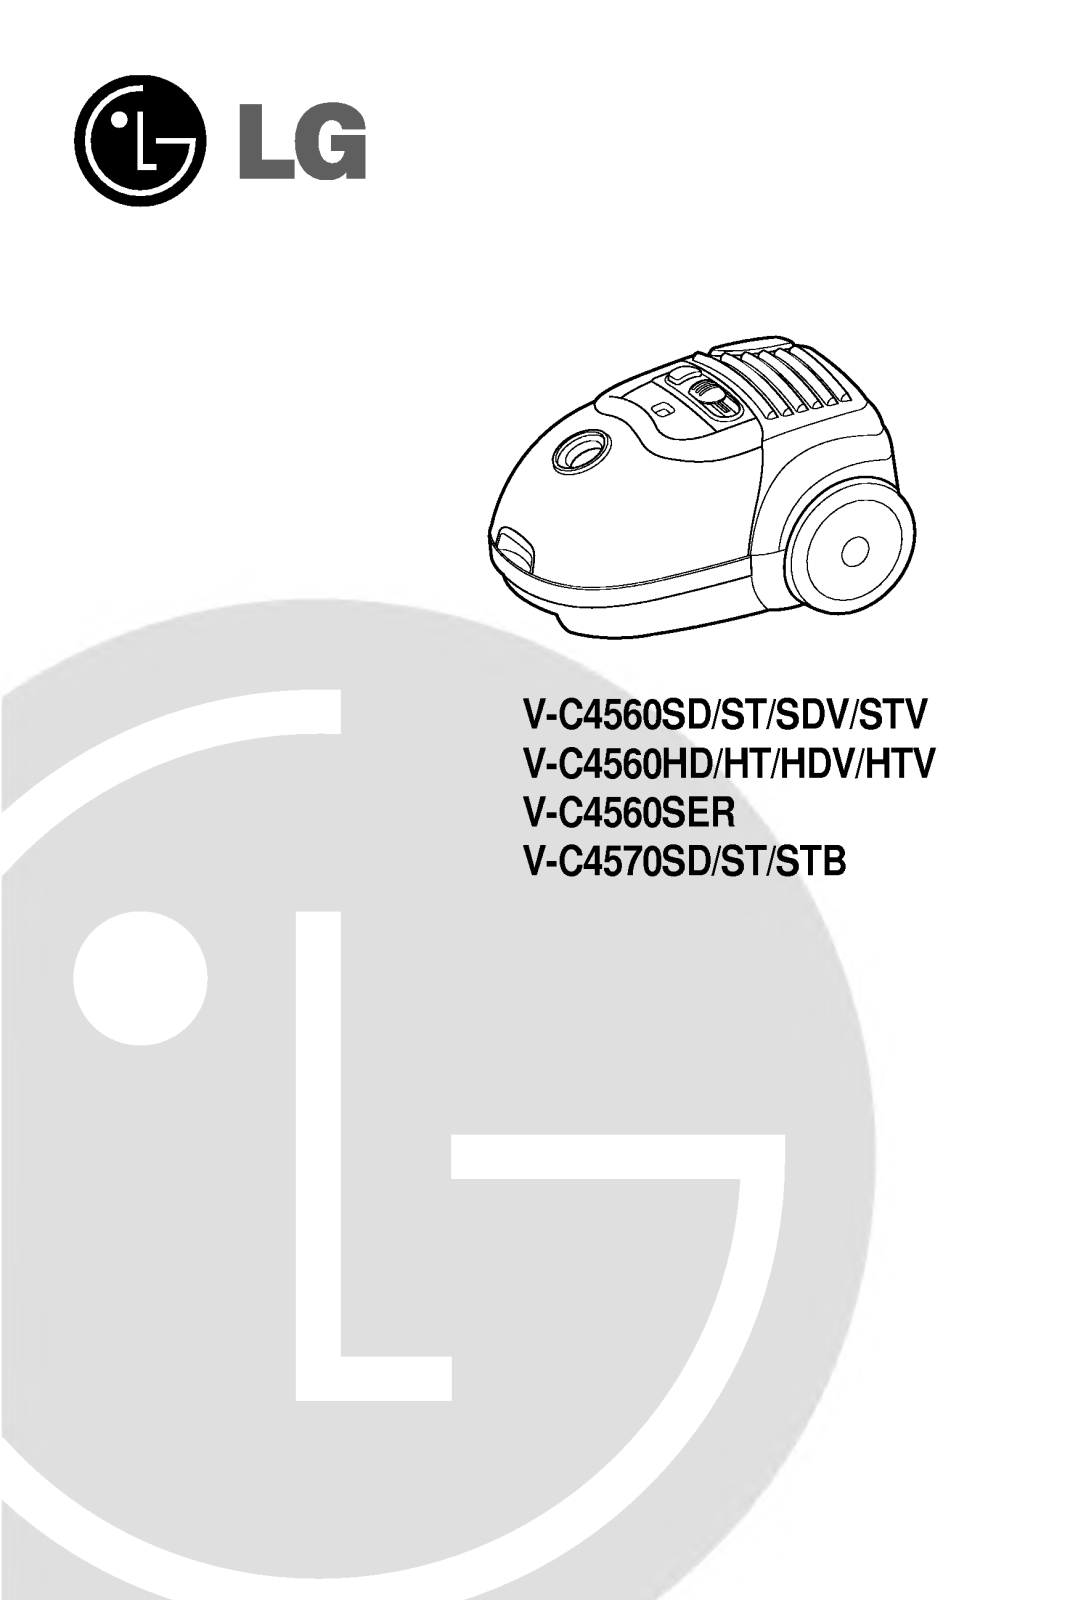 LG V-C4560SER, V-C4570STB User Manual